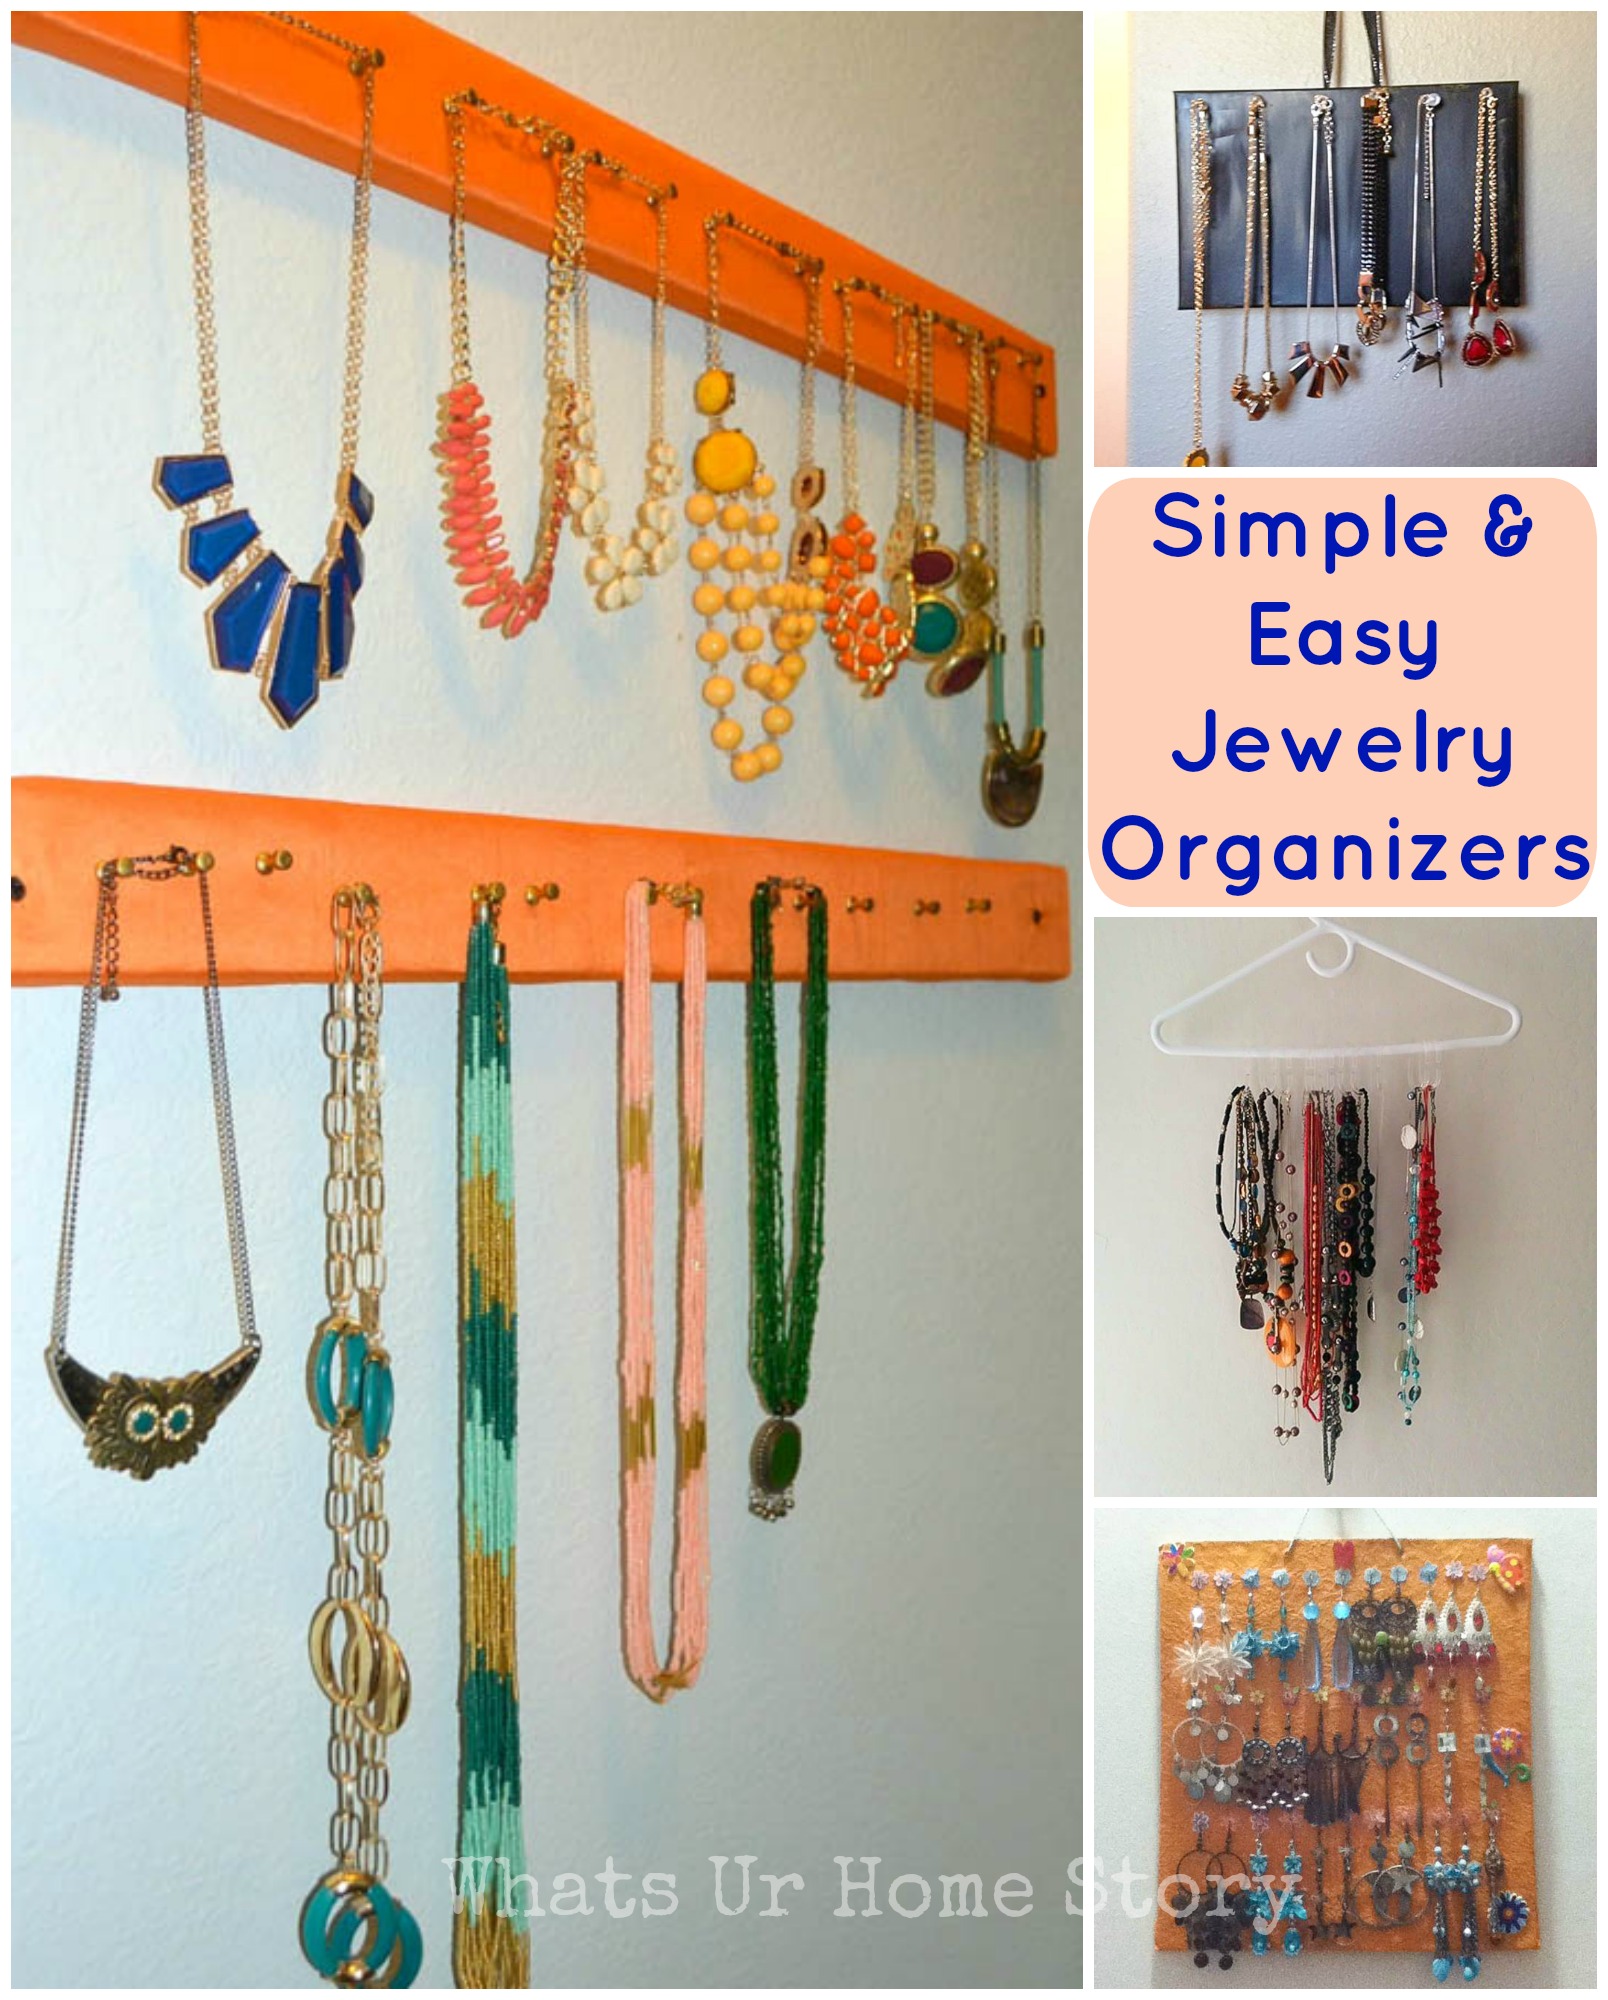 Simple & Easy Jewelry Organizers